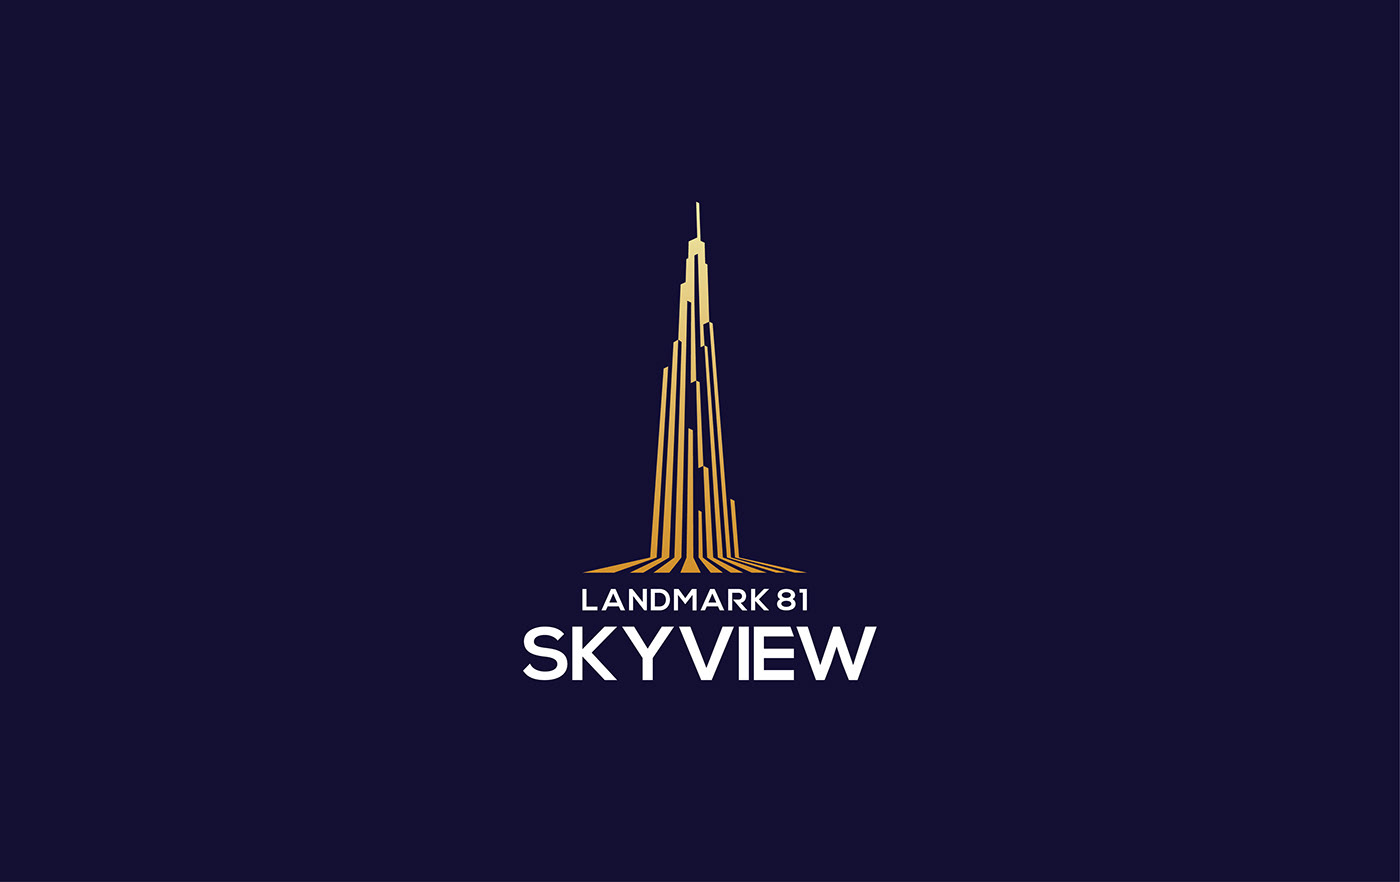 Landmark 81 SkyView on Behance